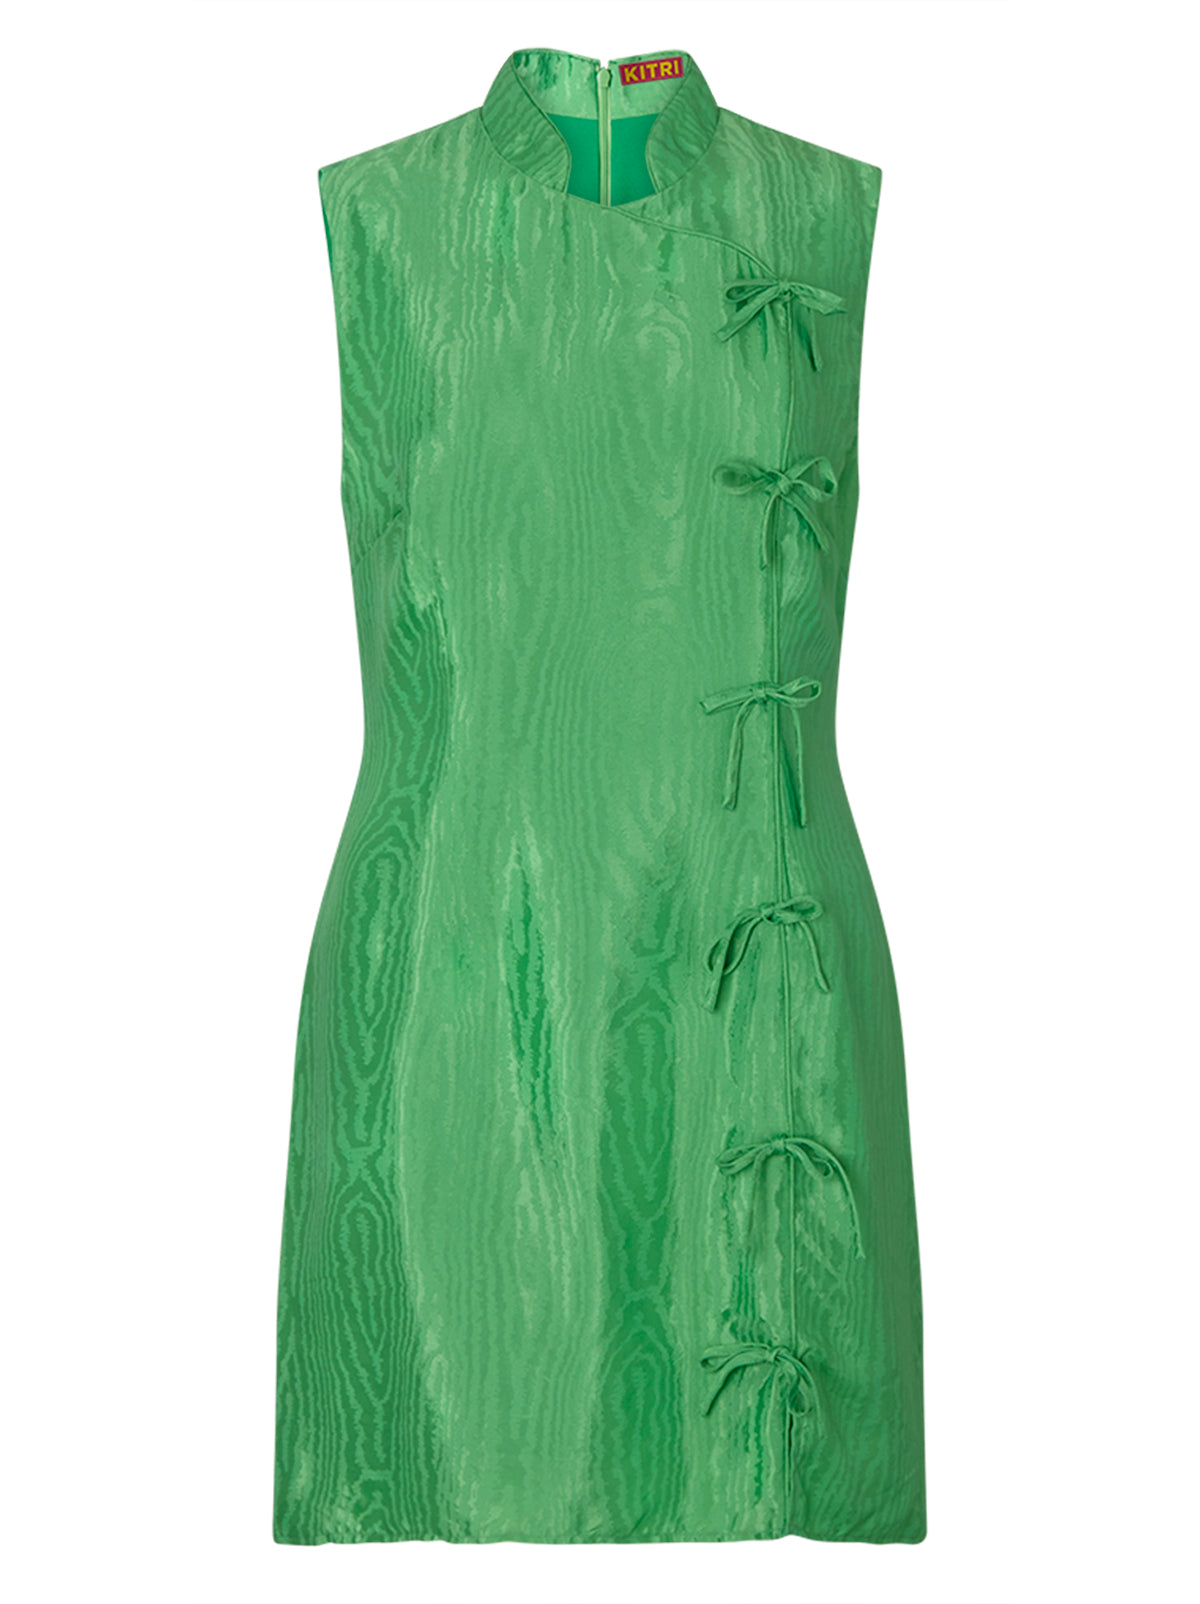 Aubrey Lime Green Mini Dress By KITRI Studio